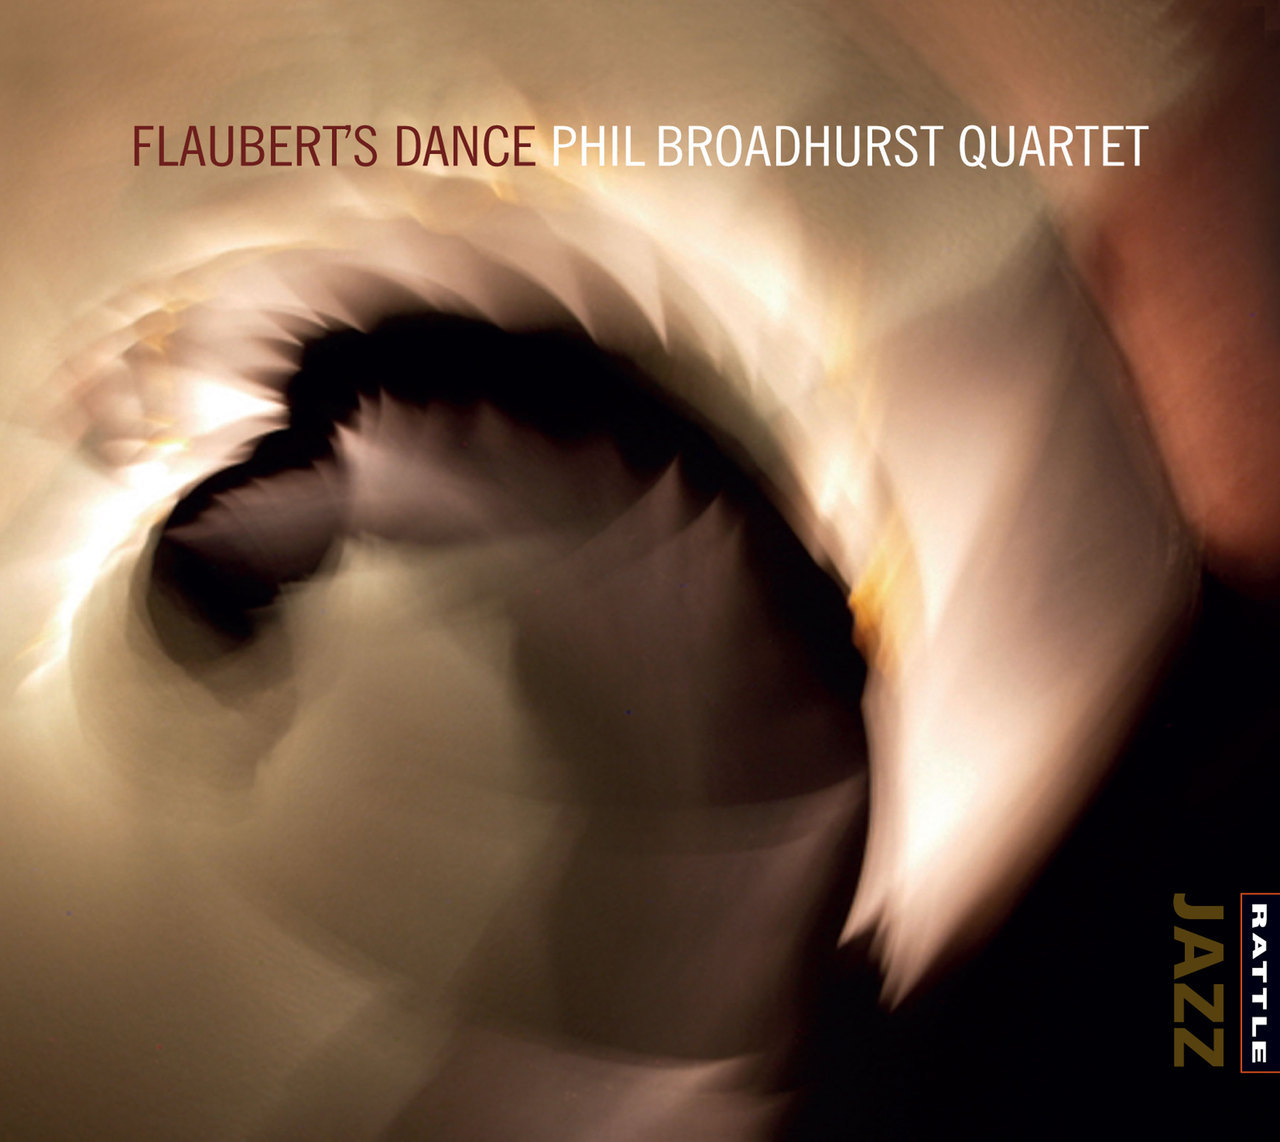 PHIL BROADHURST - Flaubert's Dance cover 